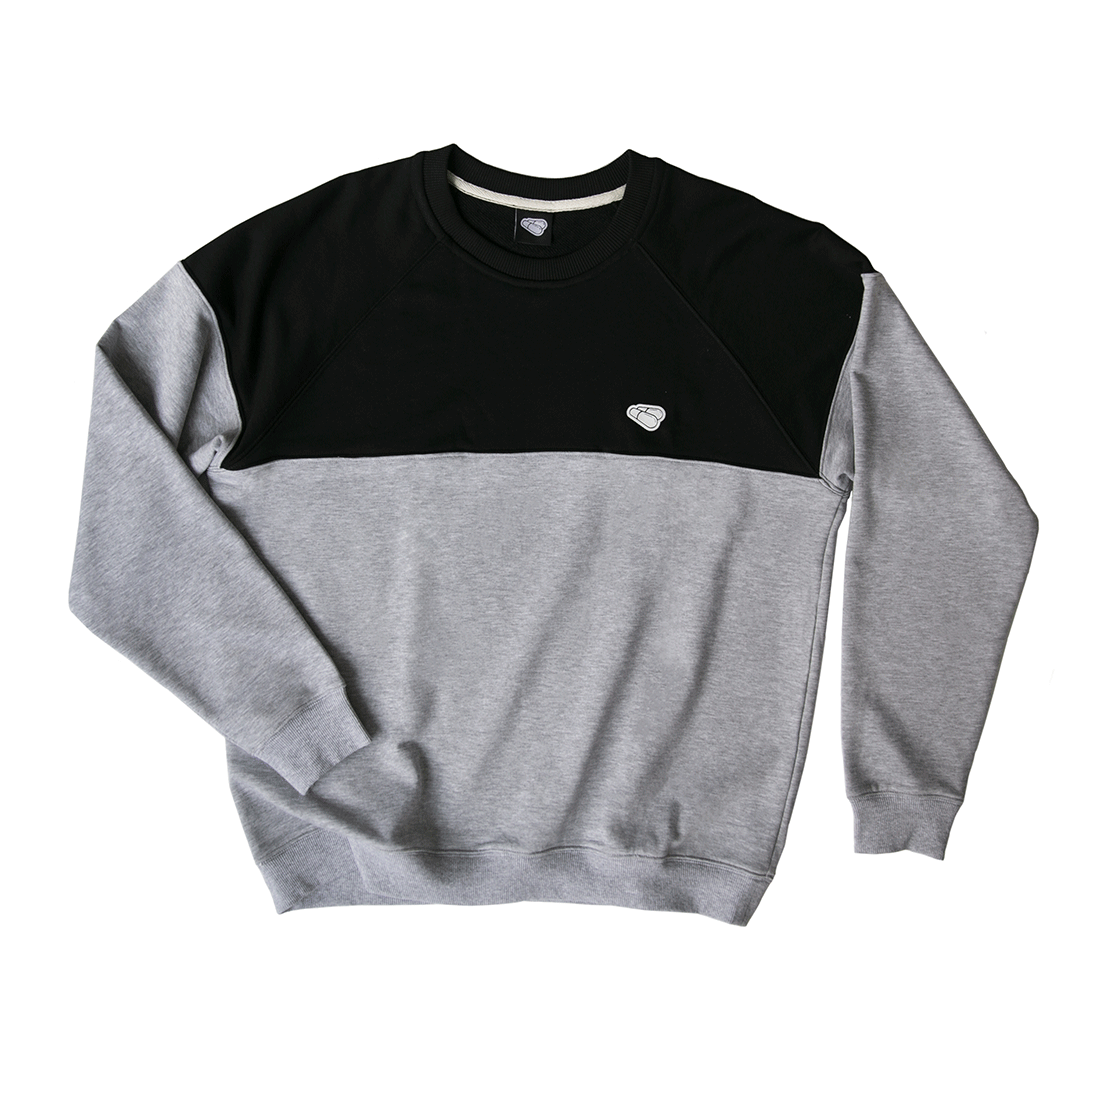 DUAL black and grey PILLS WHEELS sweatshirt